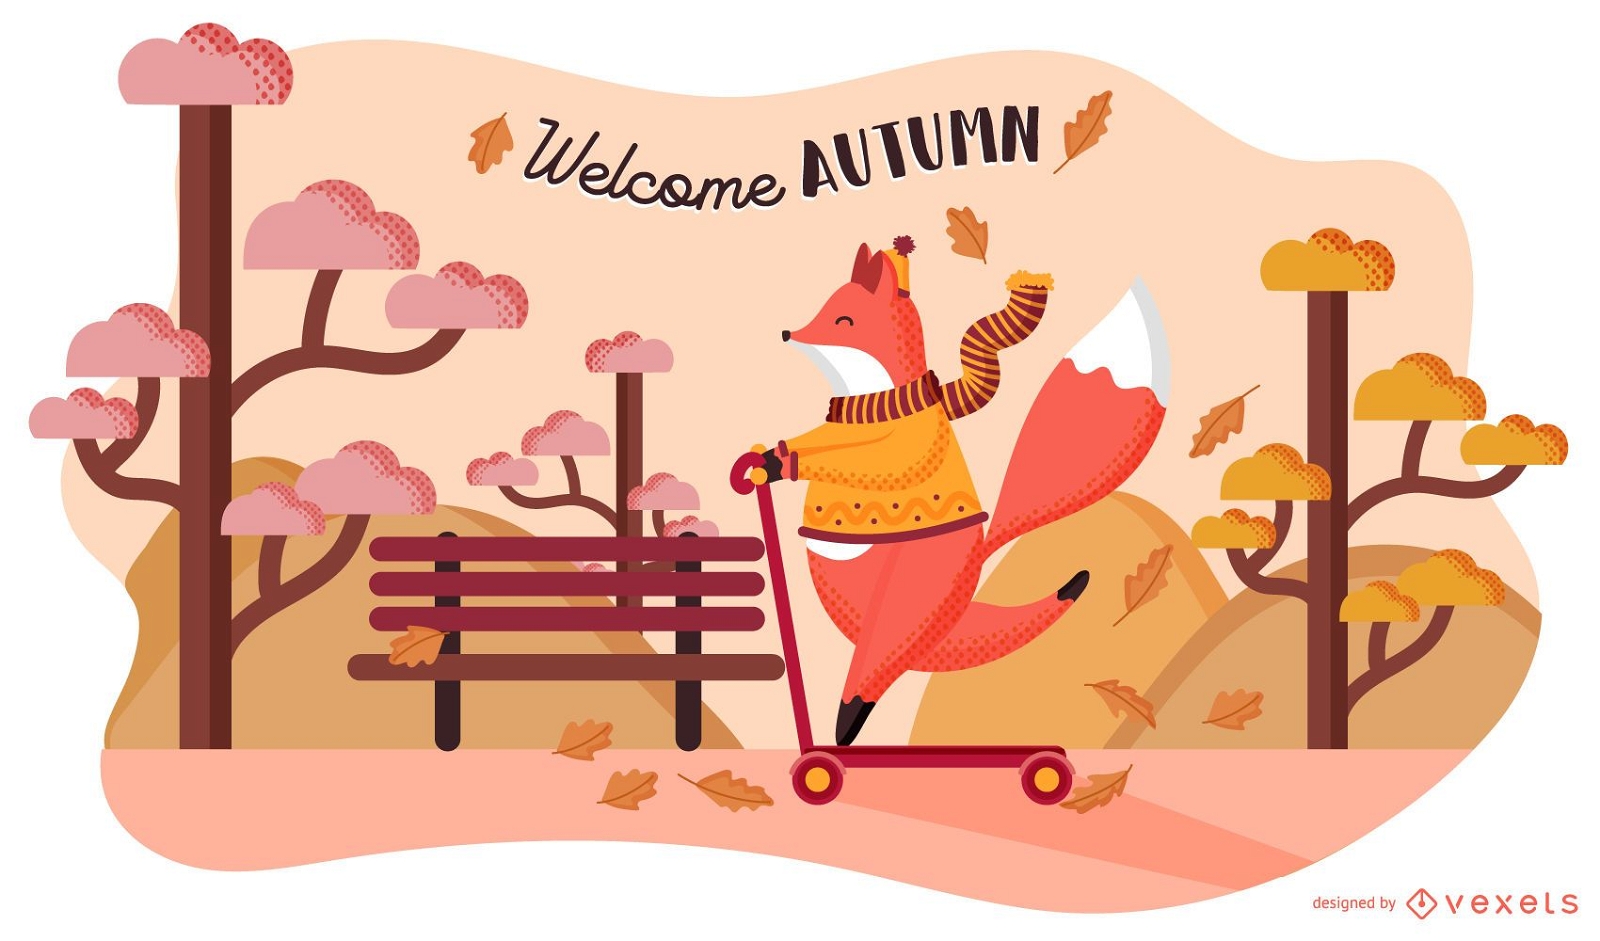 Welcome autumn fox illustration